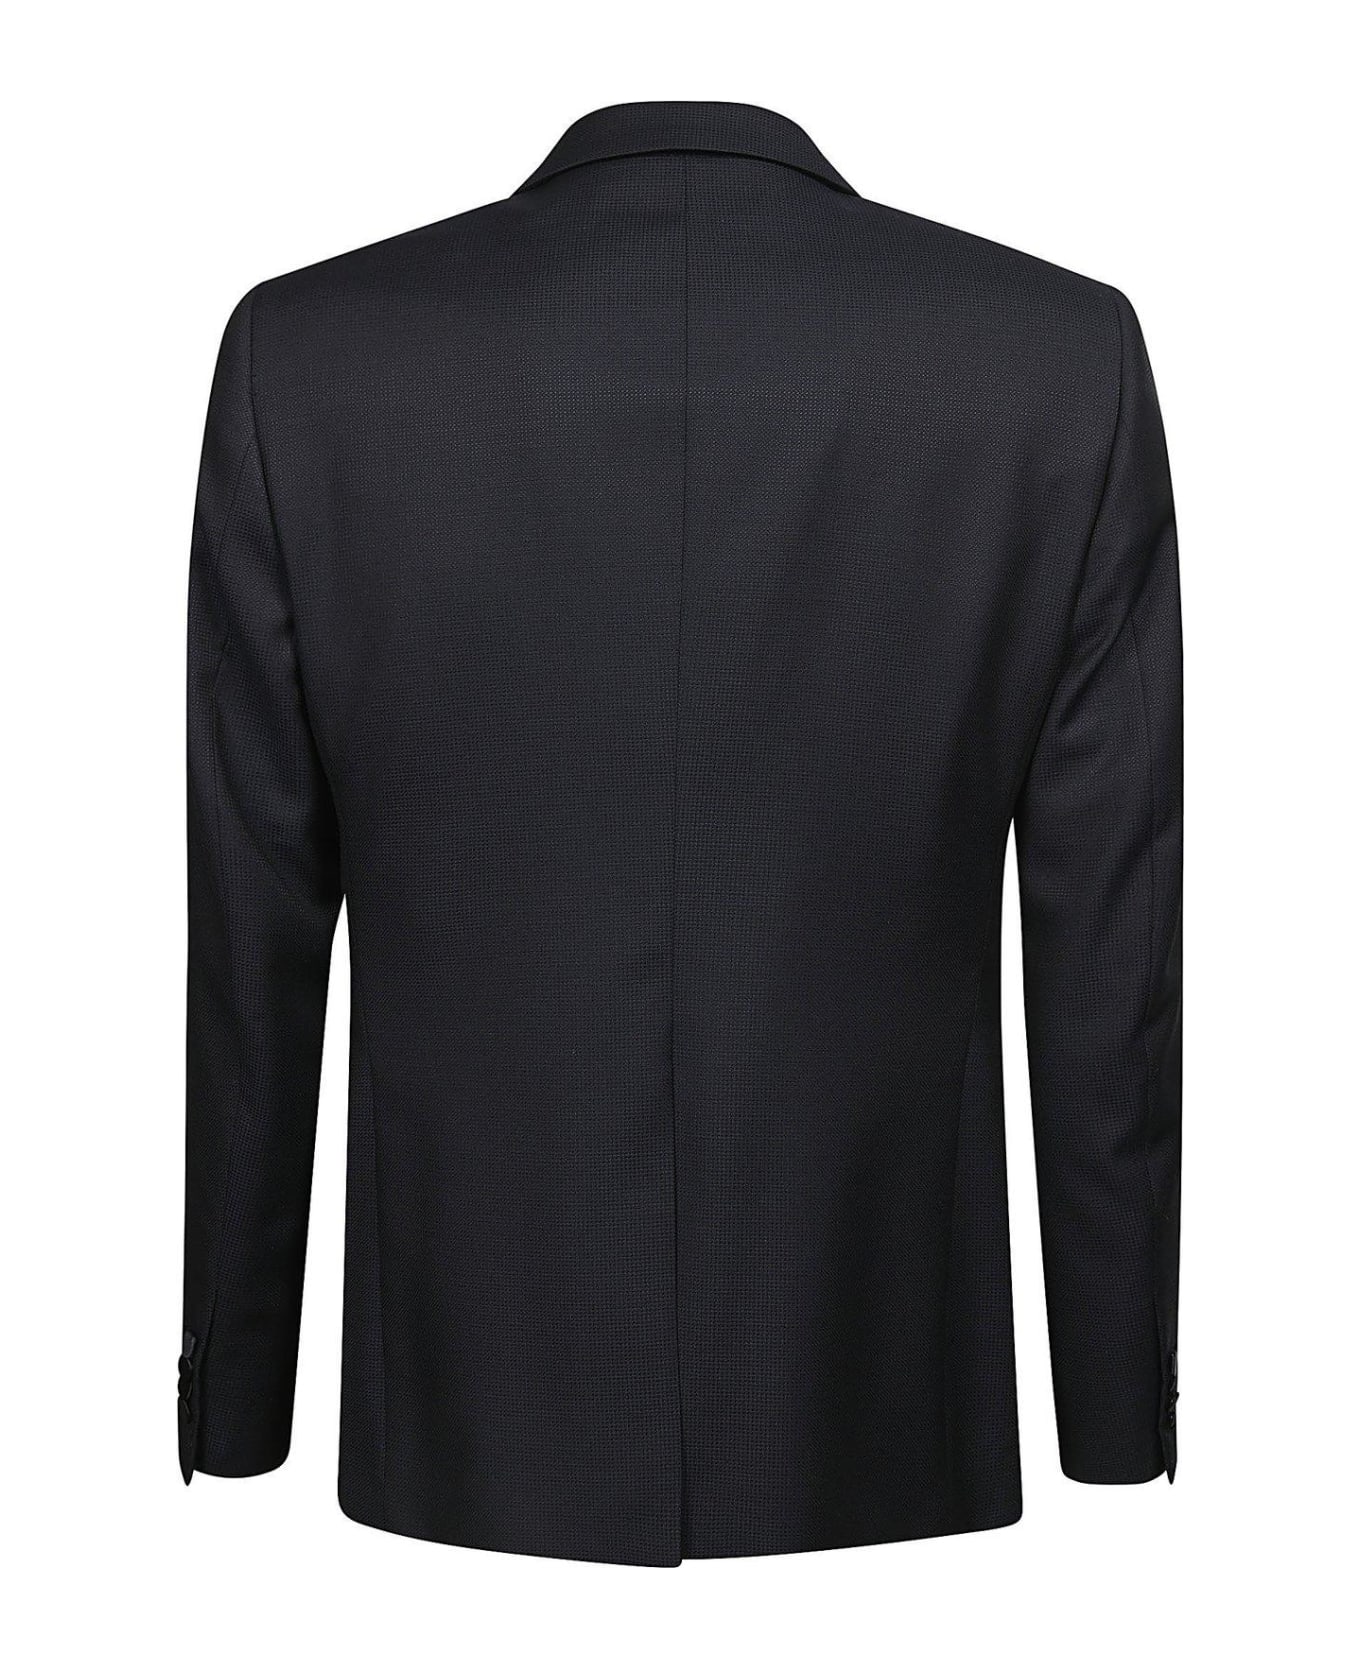 Tagliatore Single-breasted Three-piece Suit Set - Blu scuro スーツ